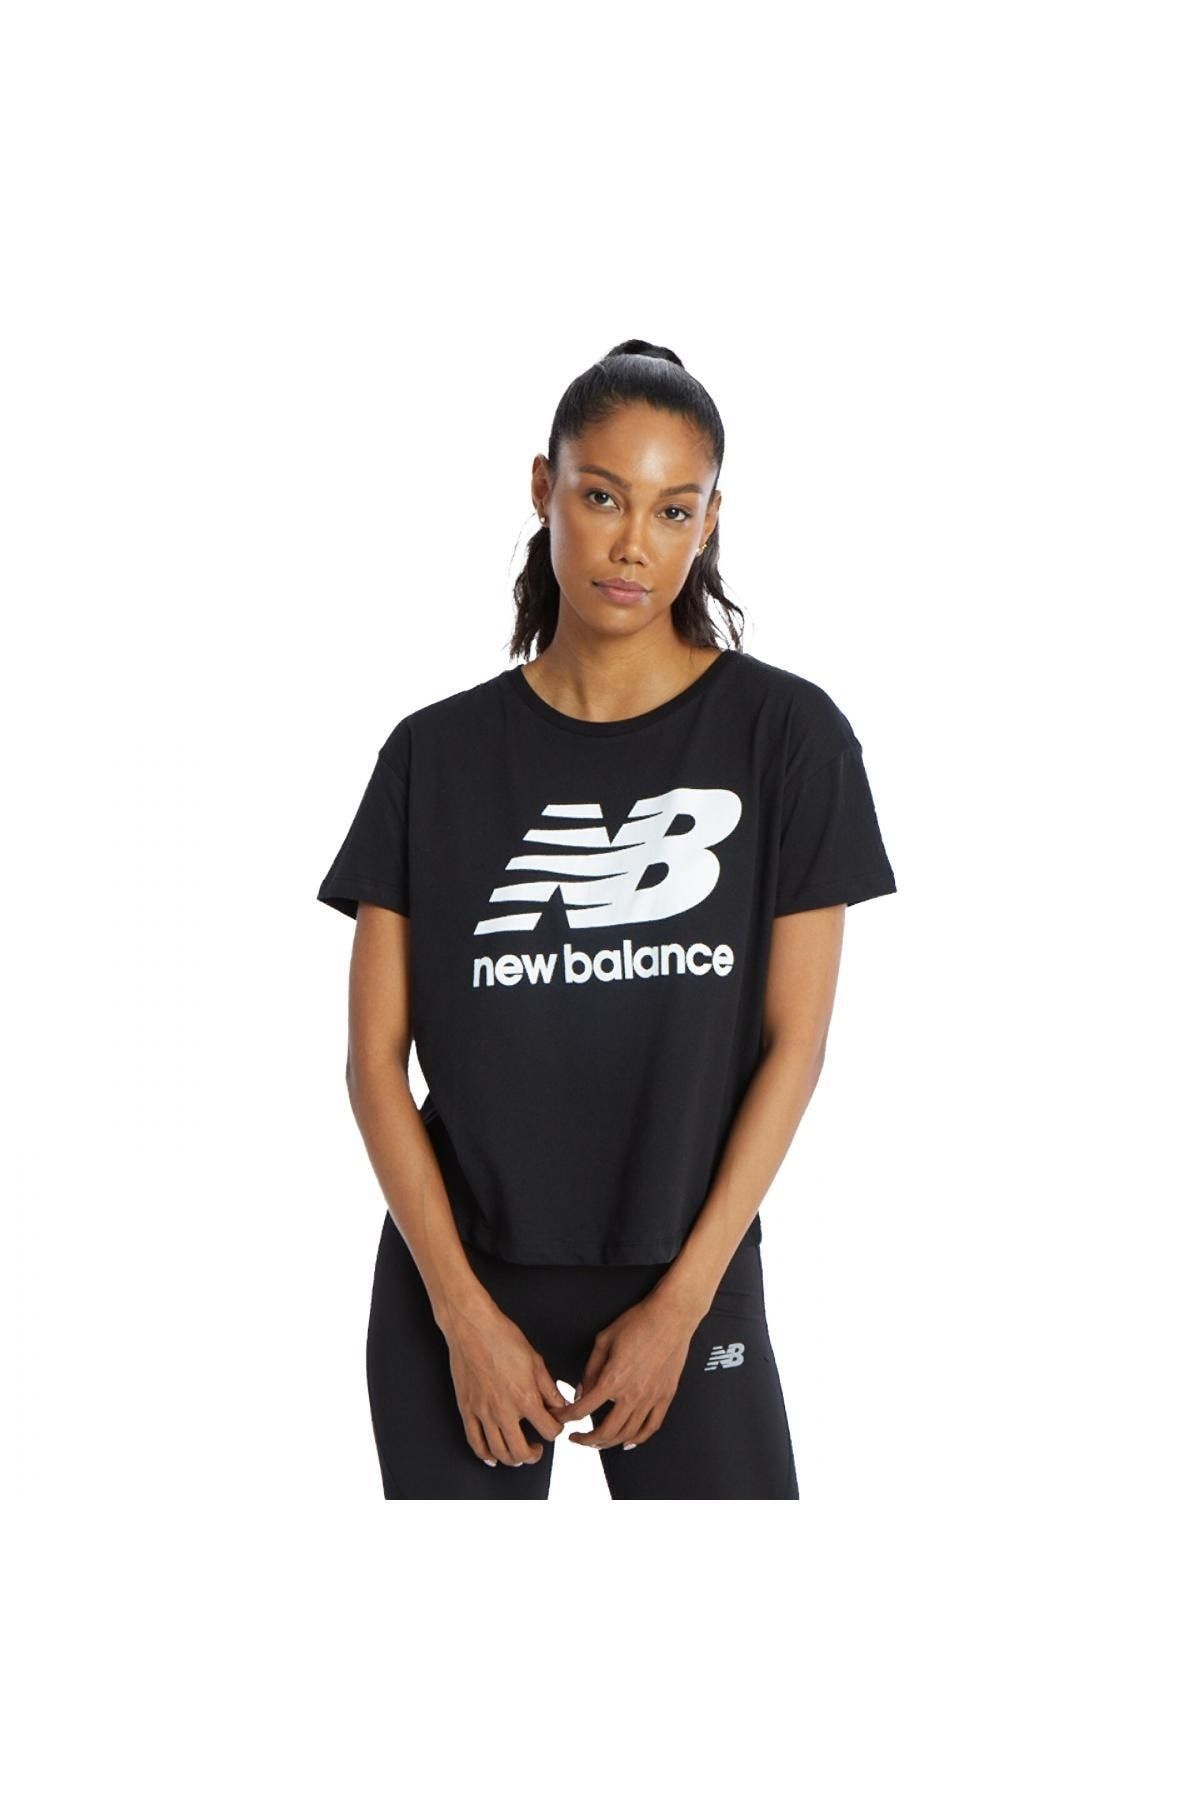 New Balance Wnt1203 Nb Womens Lifestyle Siyah Kadın T-shirt